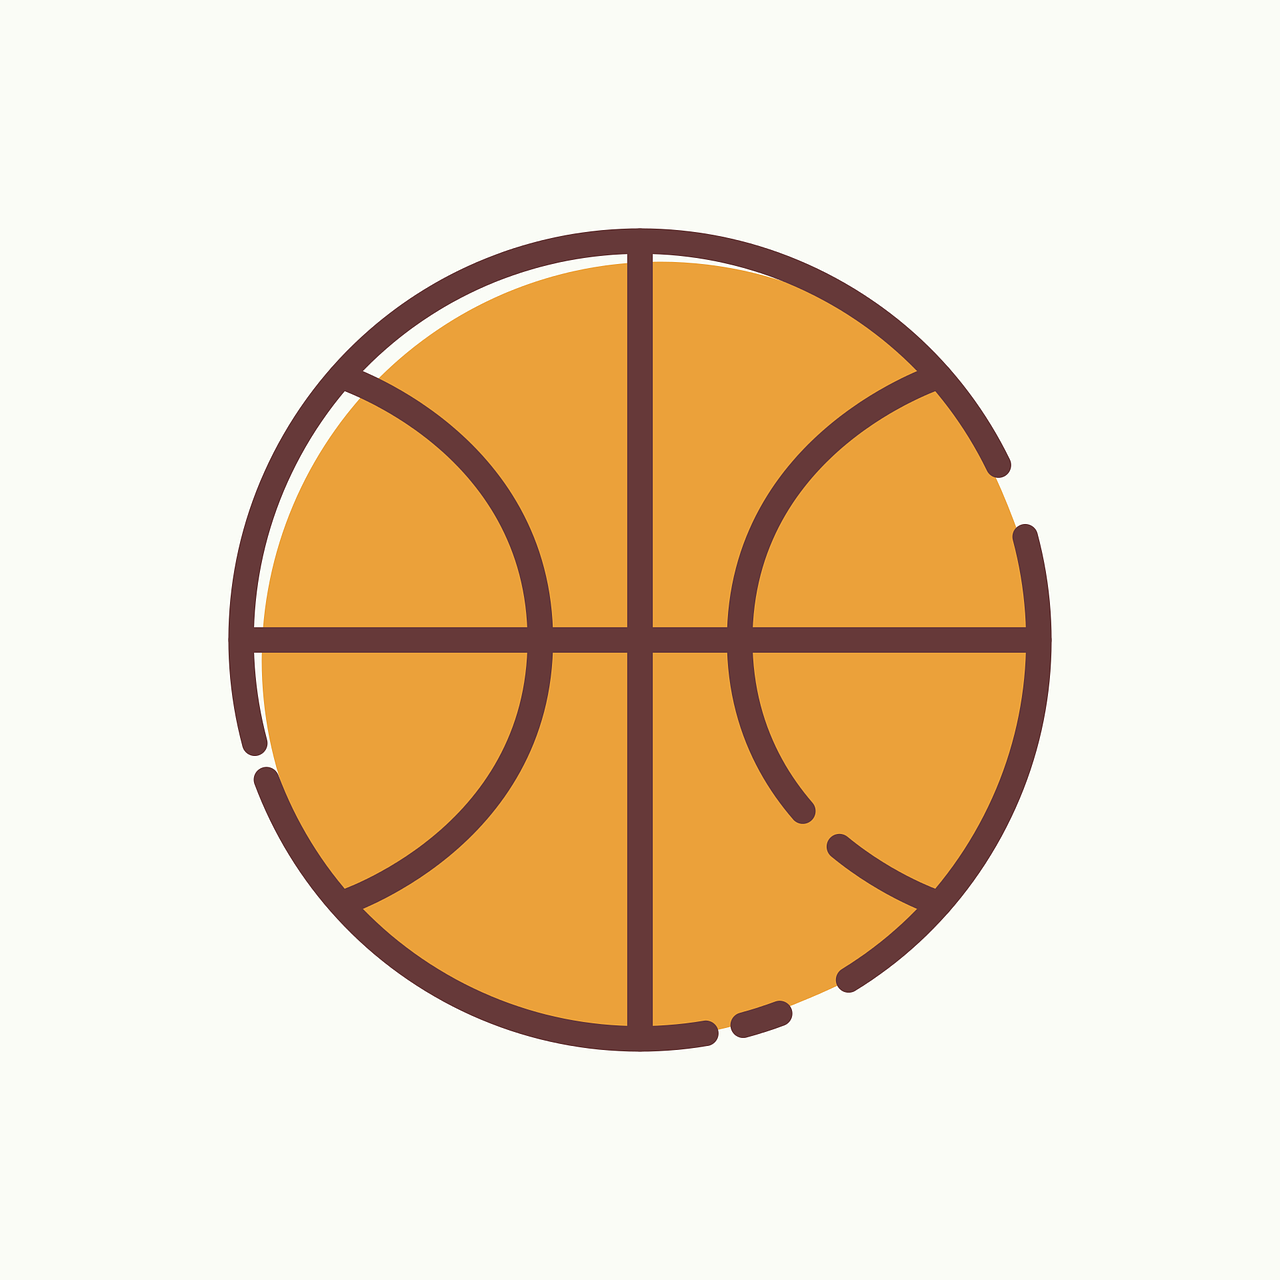 Basketball,play,sport,team,ball - free image from needpix.com